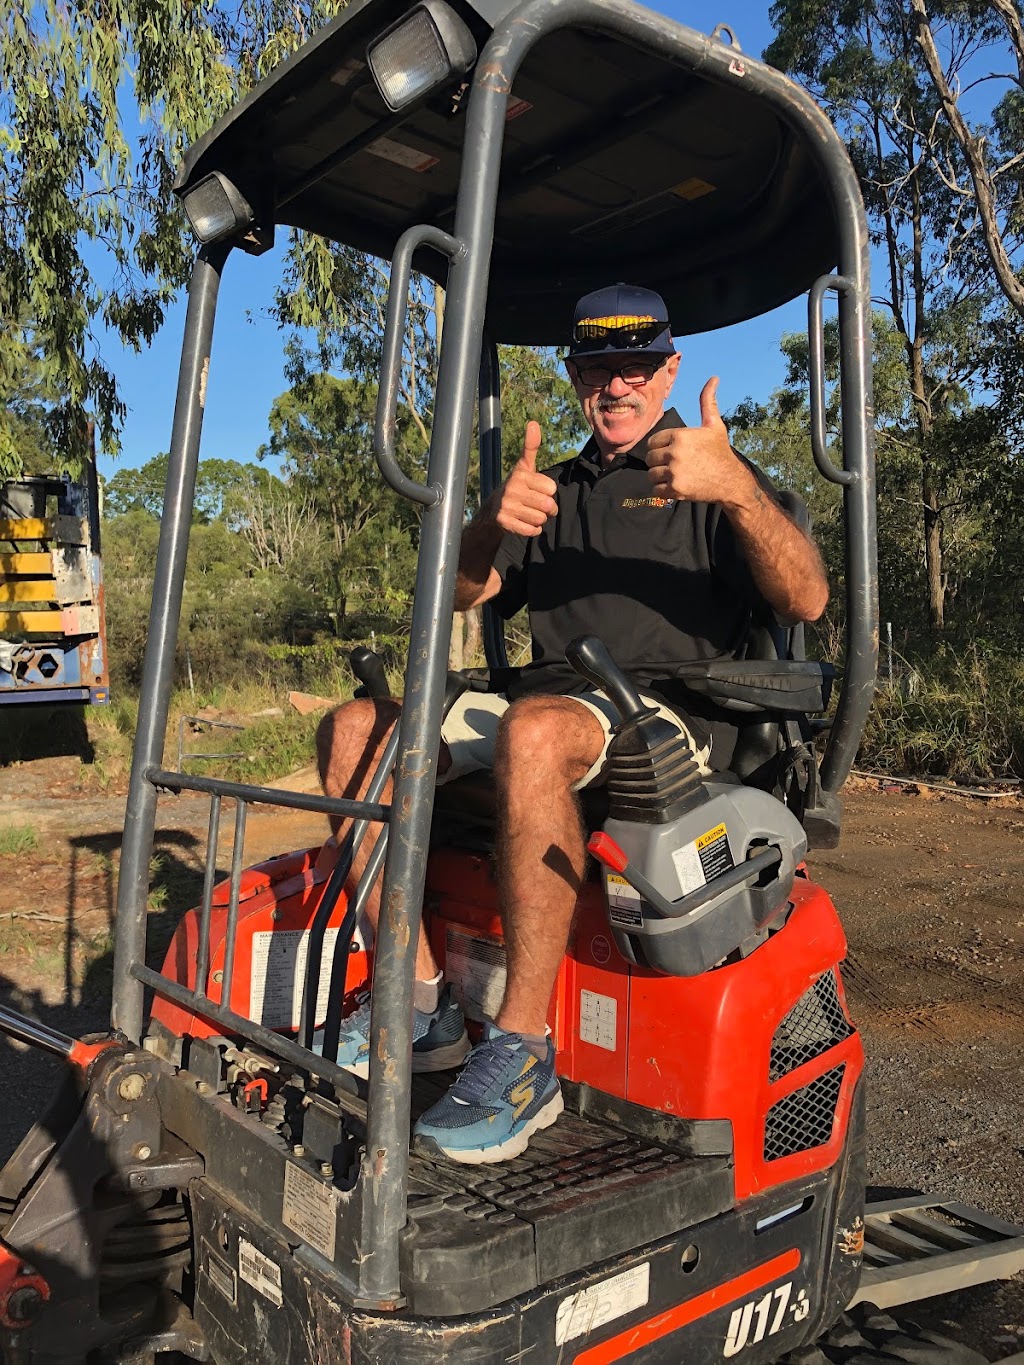 Diggermate Mini Excavator Hire North Lakes | Corner of Kinsellas Rd, East &, Richard Rd, Mango Hill QLD 4509, Australia | Phone: 0473 029 677